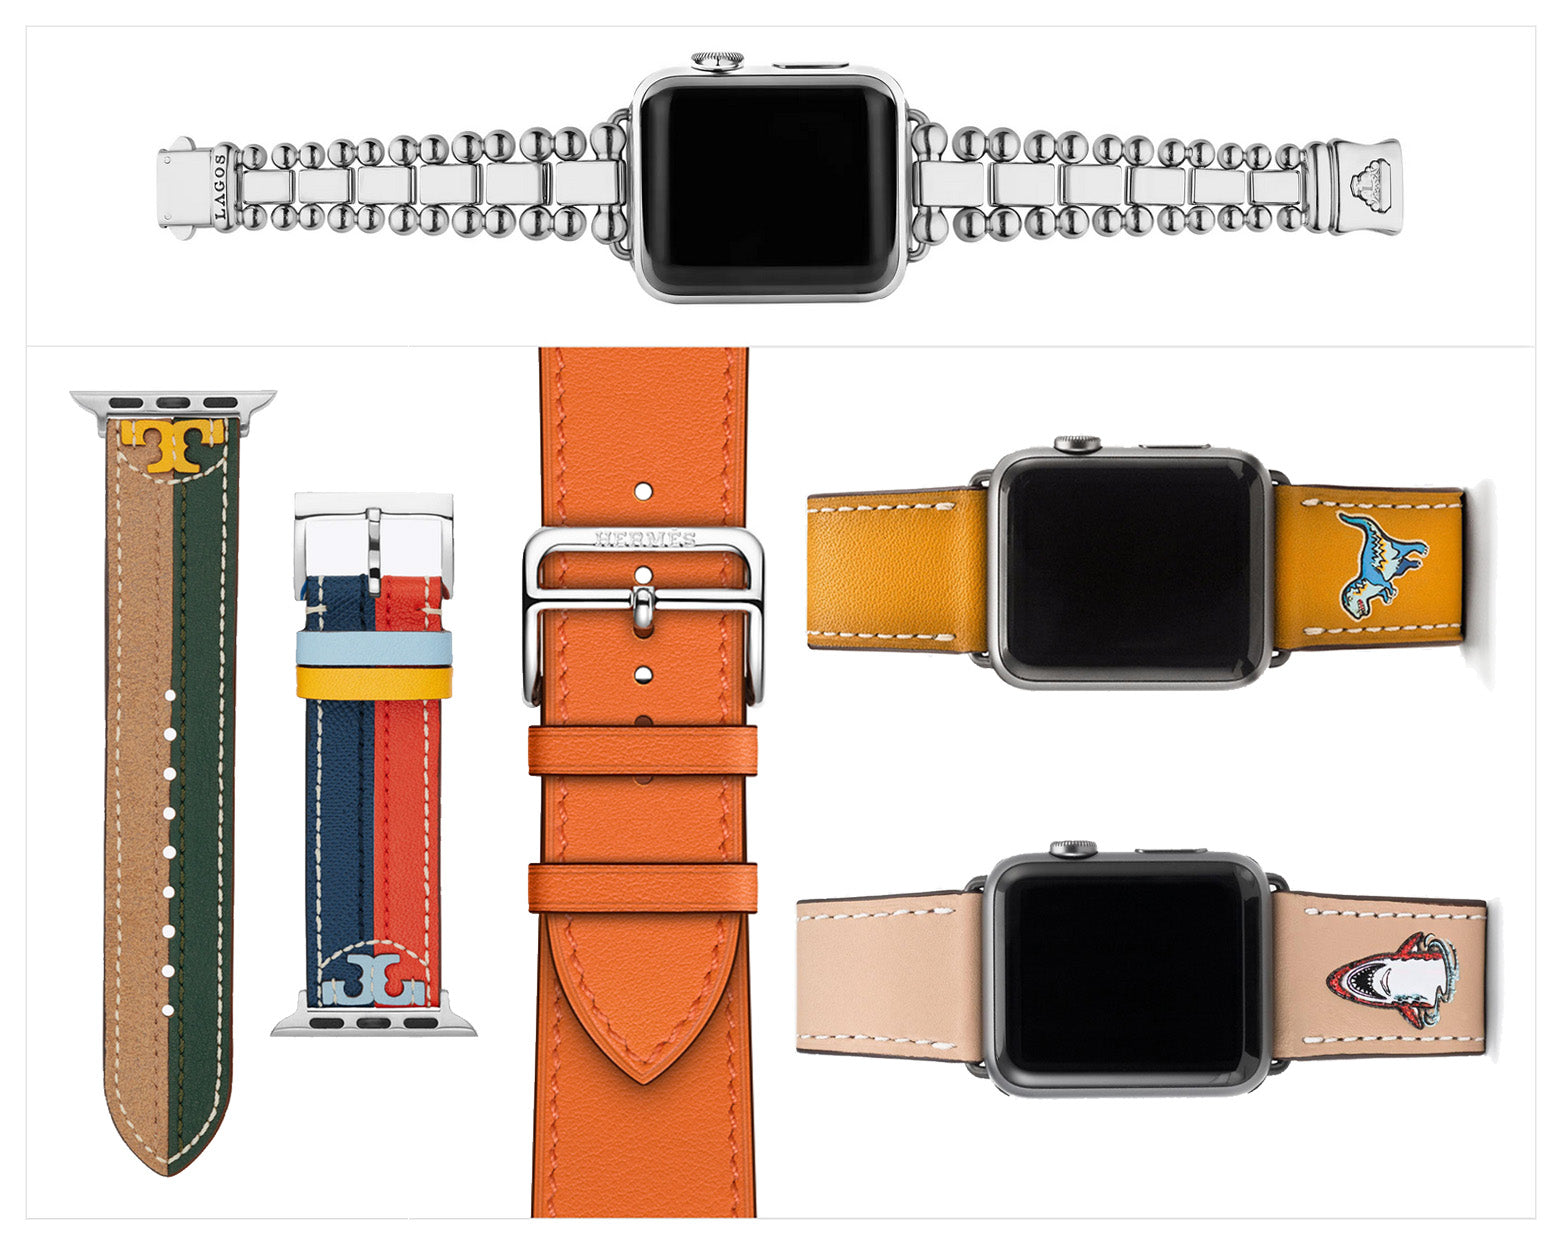 Supreme Louis Vuitton Band Strap Bracelet For All Apple Watch